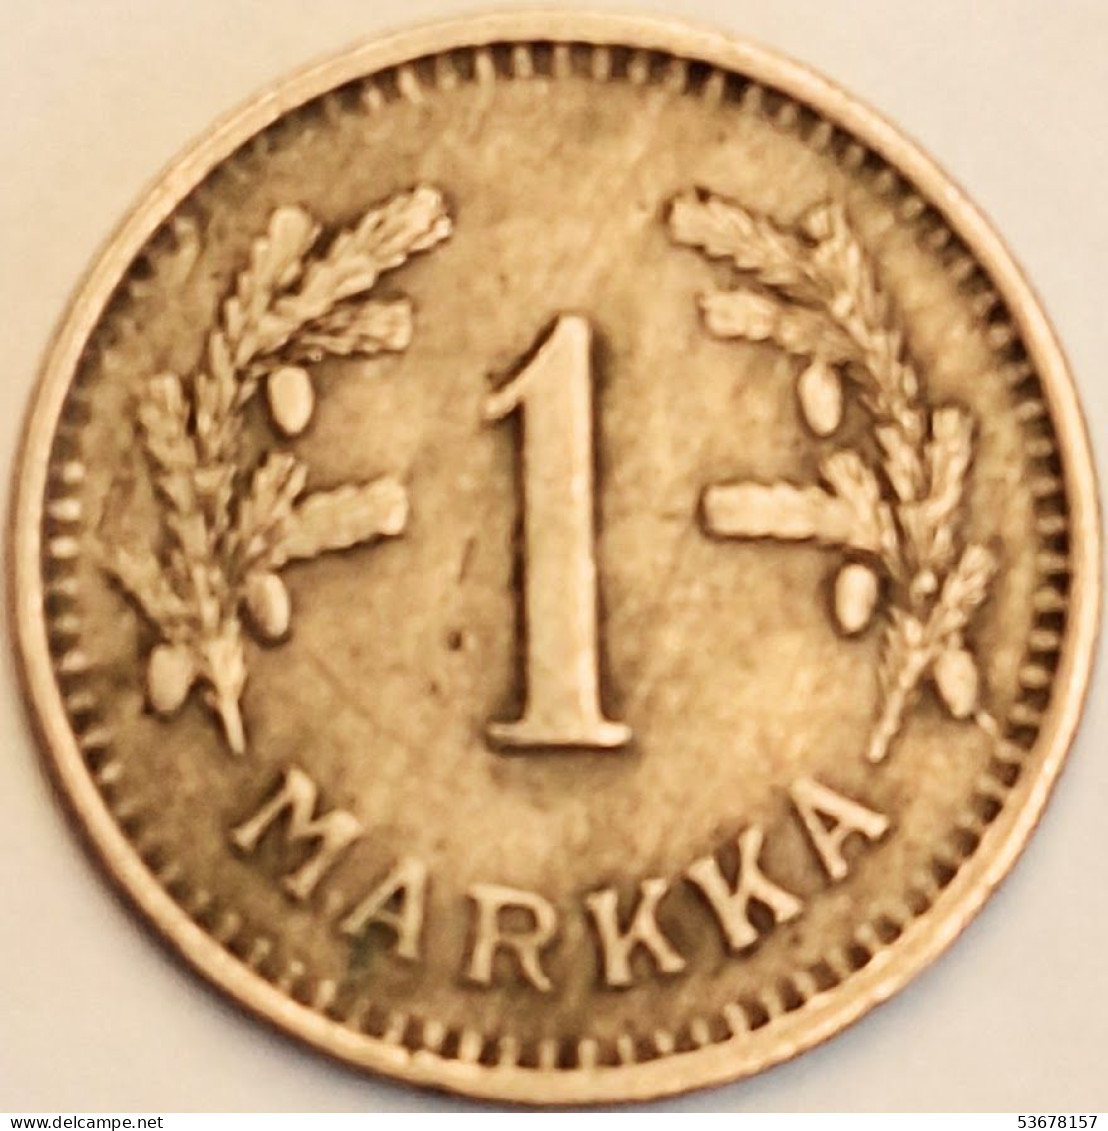 Finland - Markka 1930 S, KM# 30 (#3889) - Finnland